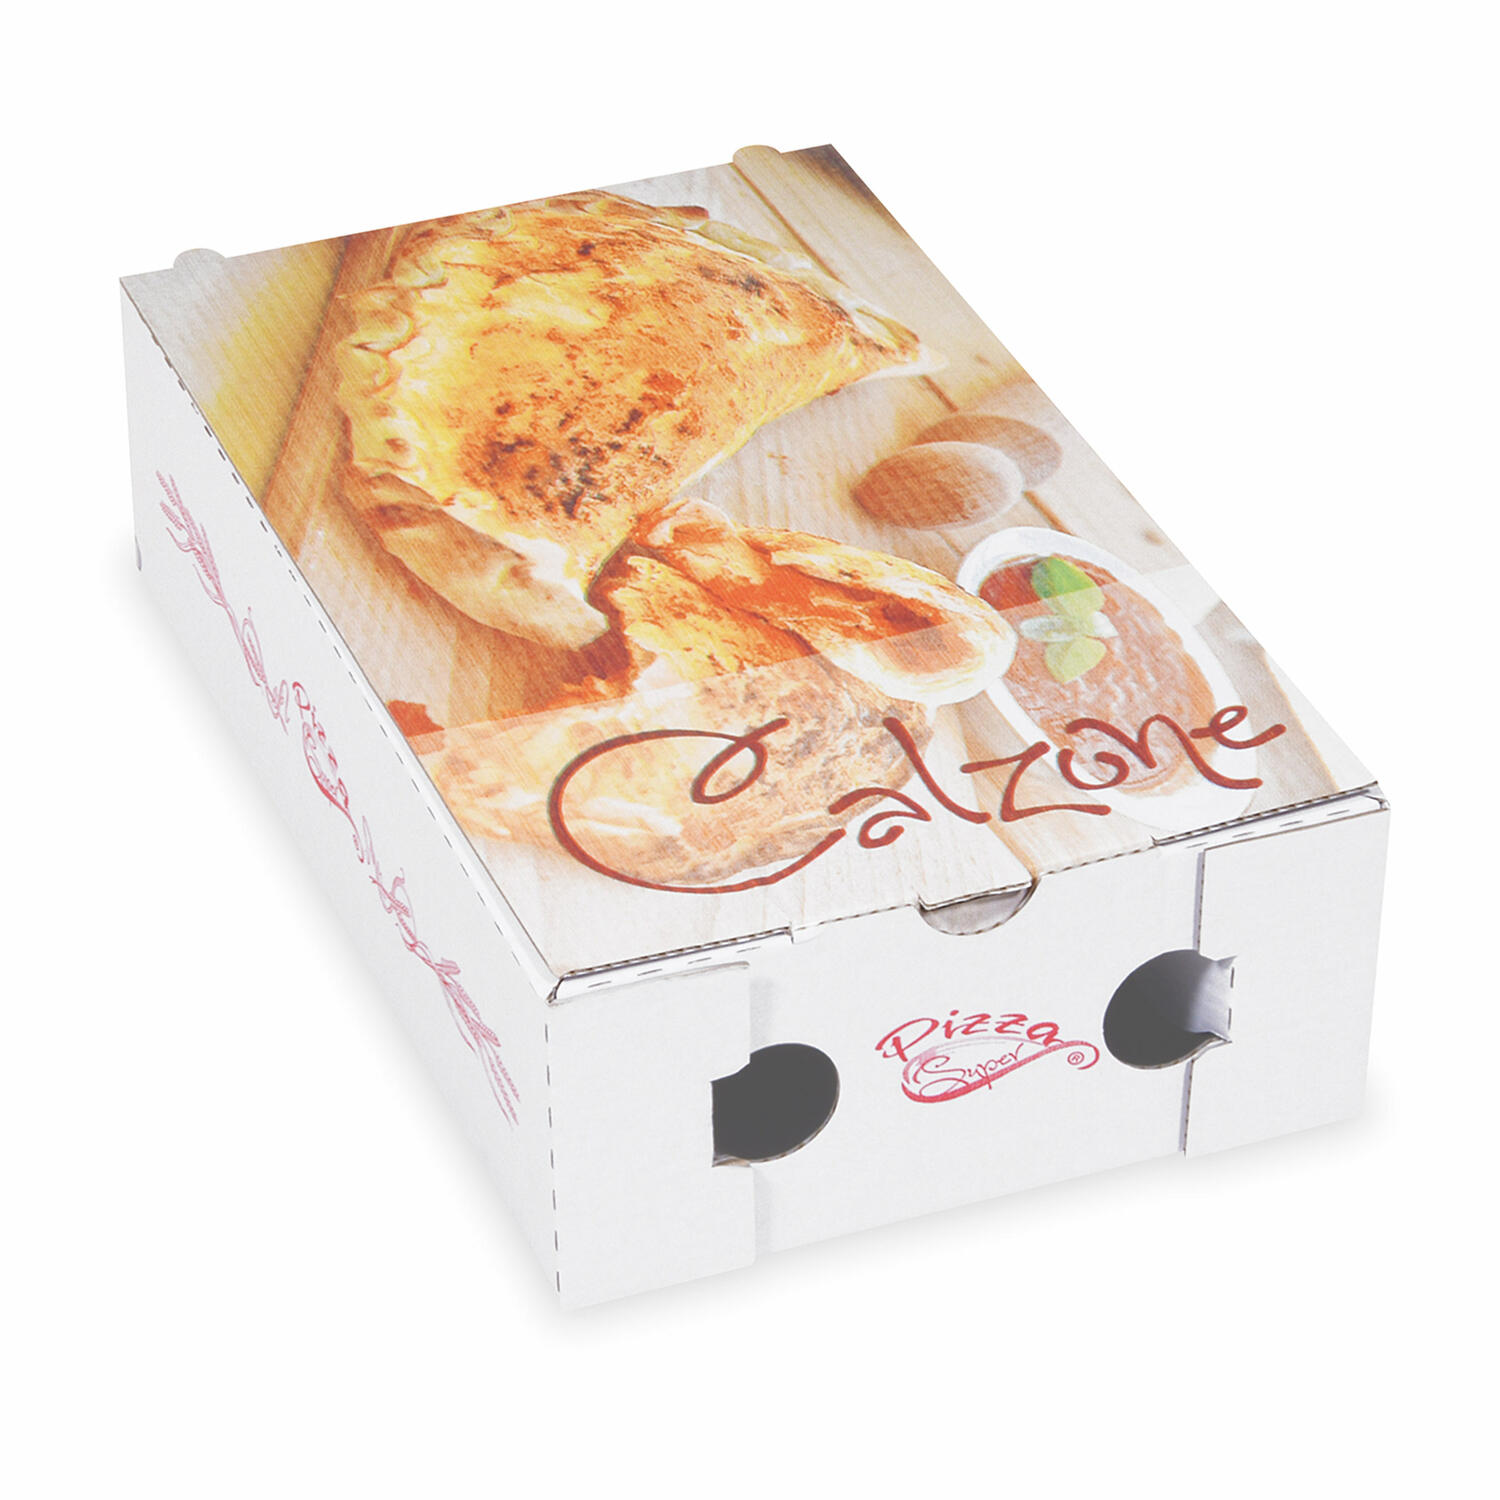 Pizzakarton CALZONE mit neutralem Motiv 27 x 16,5 x 7,5 cm 